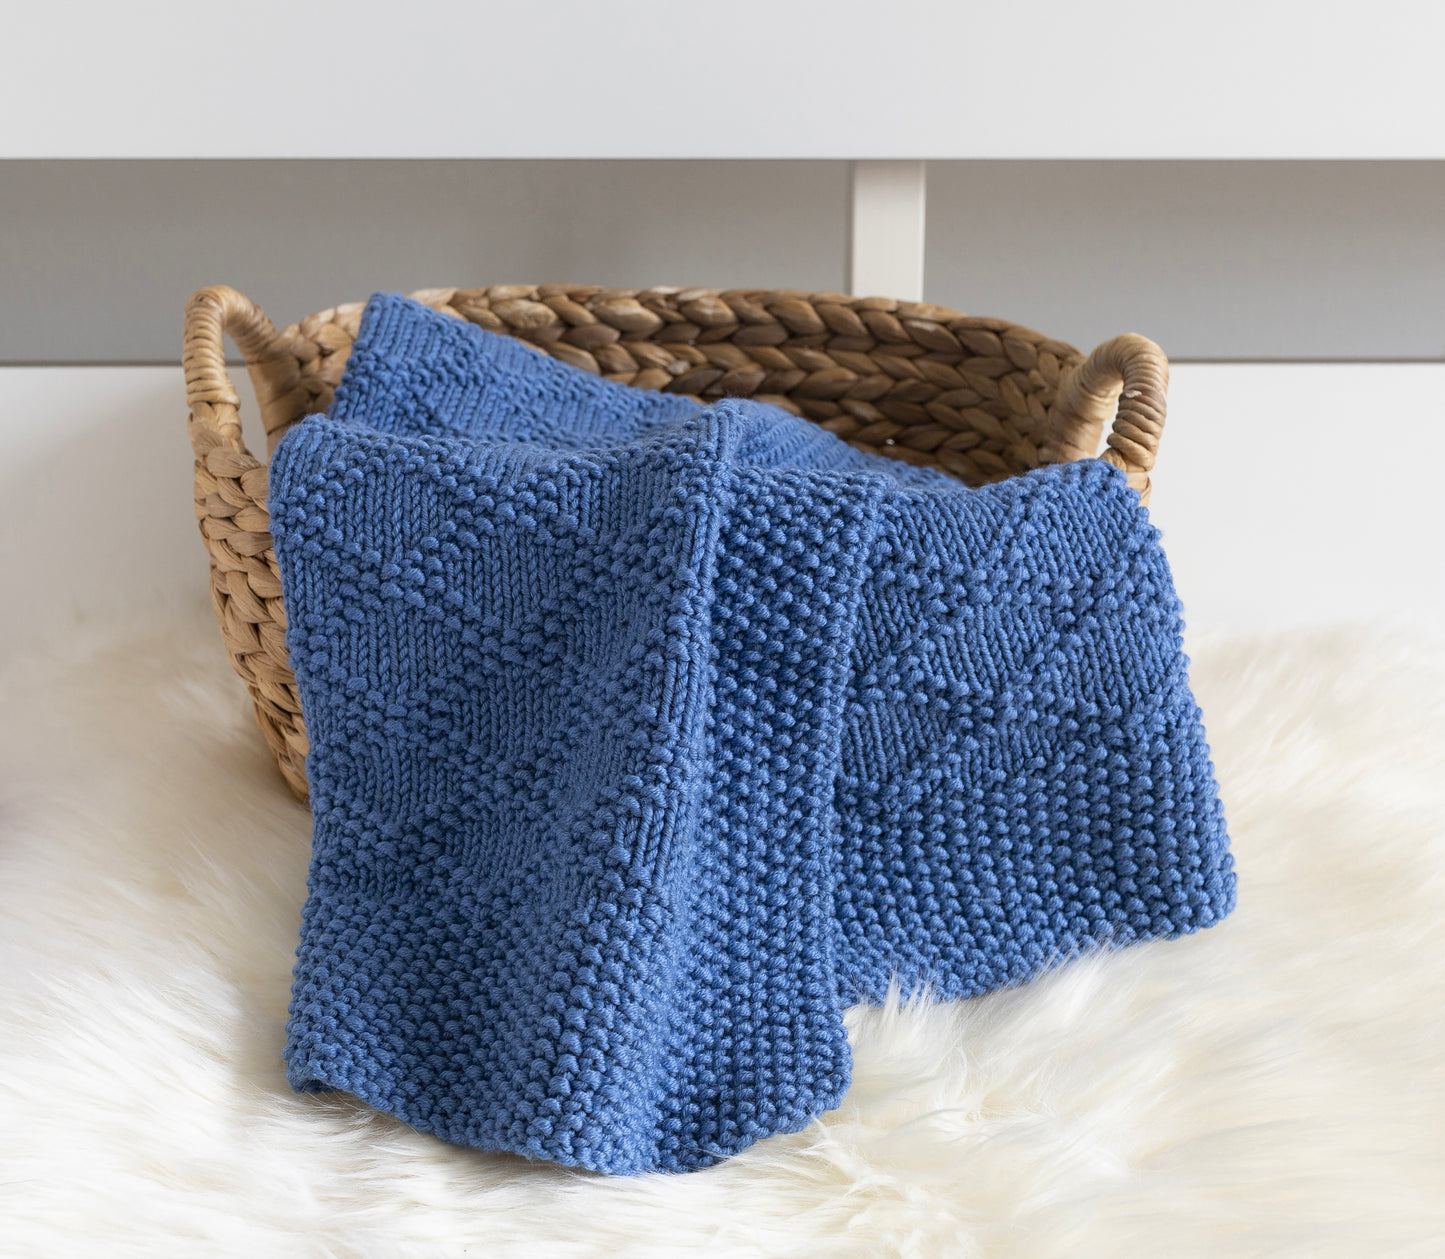 Blue merino wool hand-knitted blanket in Charles Brocade pattern in a basket